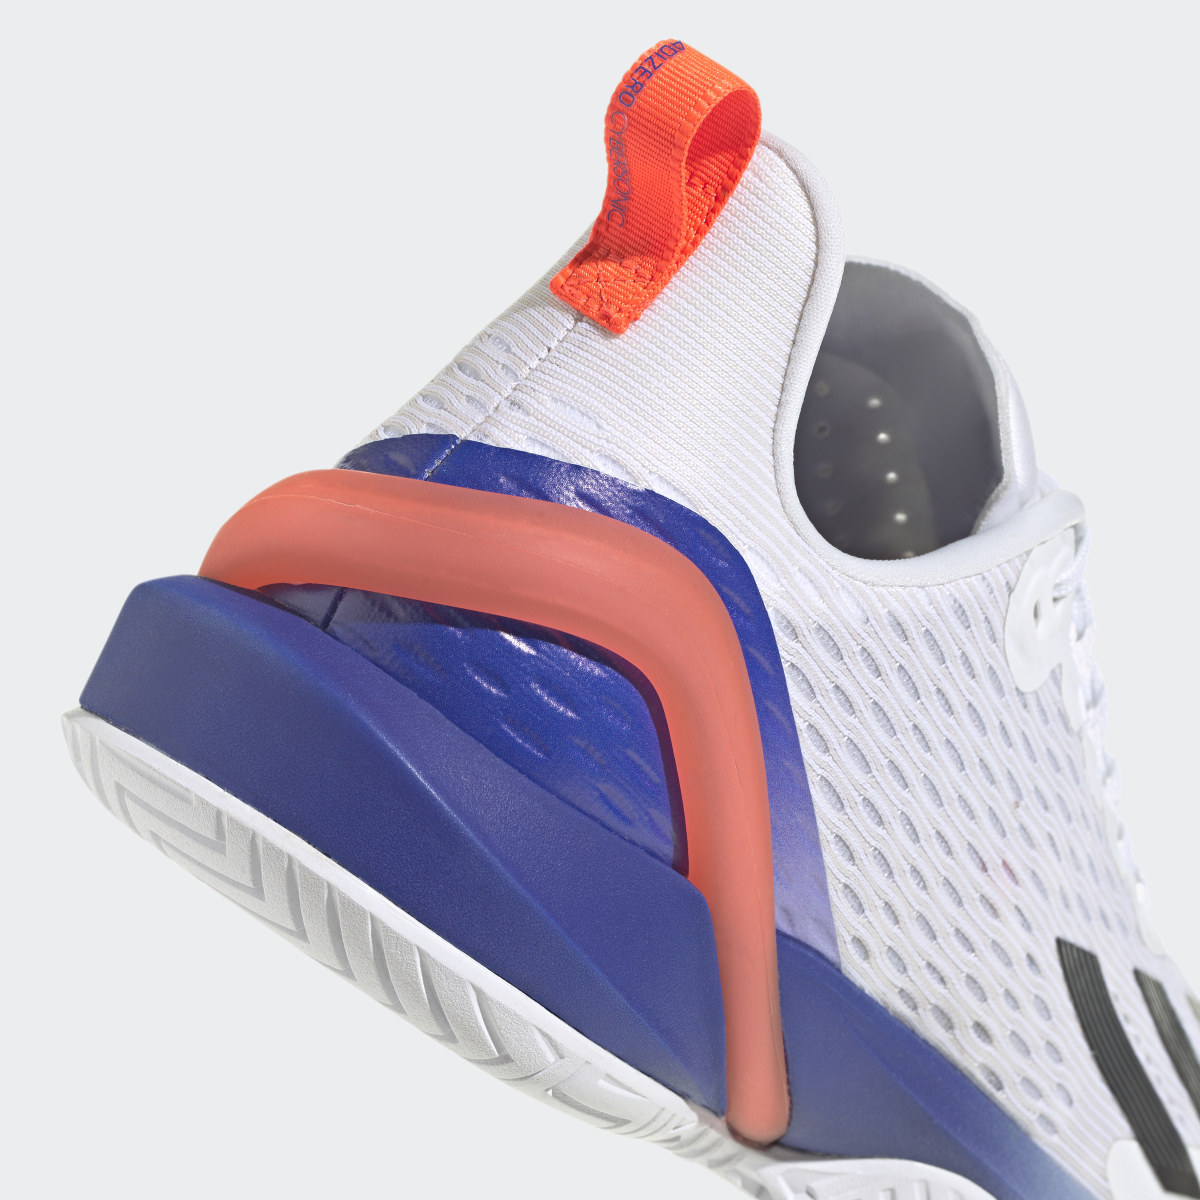 Adidas adizero Cybersonic Tenis Ayakkabısı. 16